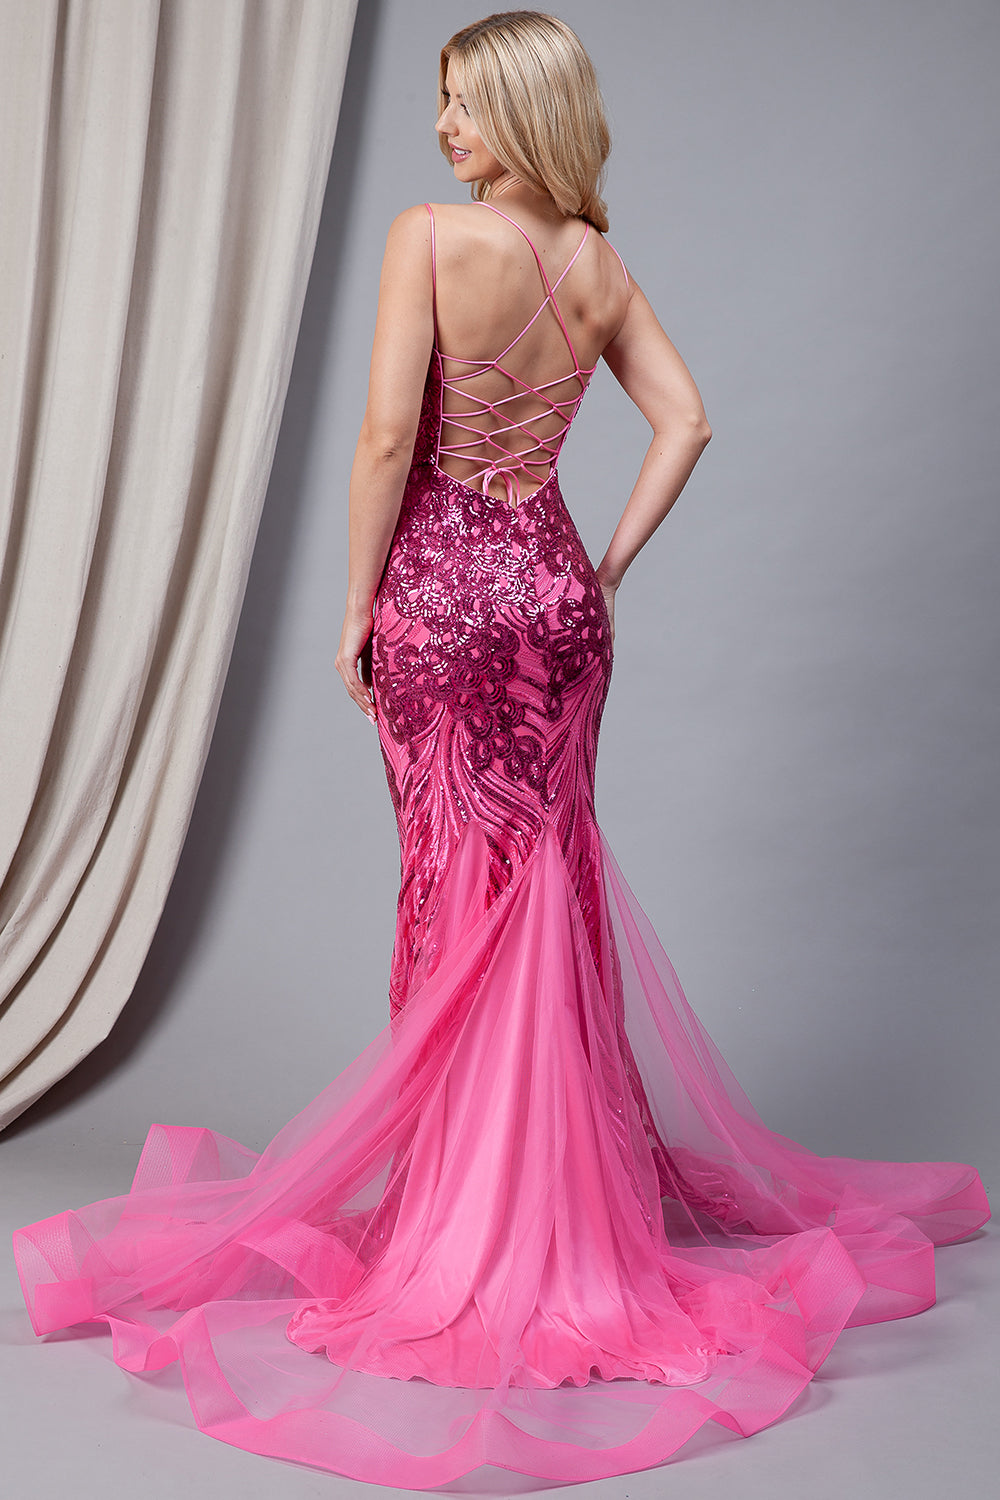 Embroidered Sequins Tulle Skirt Illusion V-Neck Long Prom Dress AC7021-Prom Dress-smcfashion.com